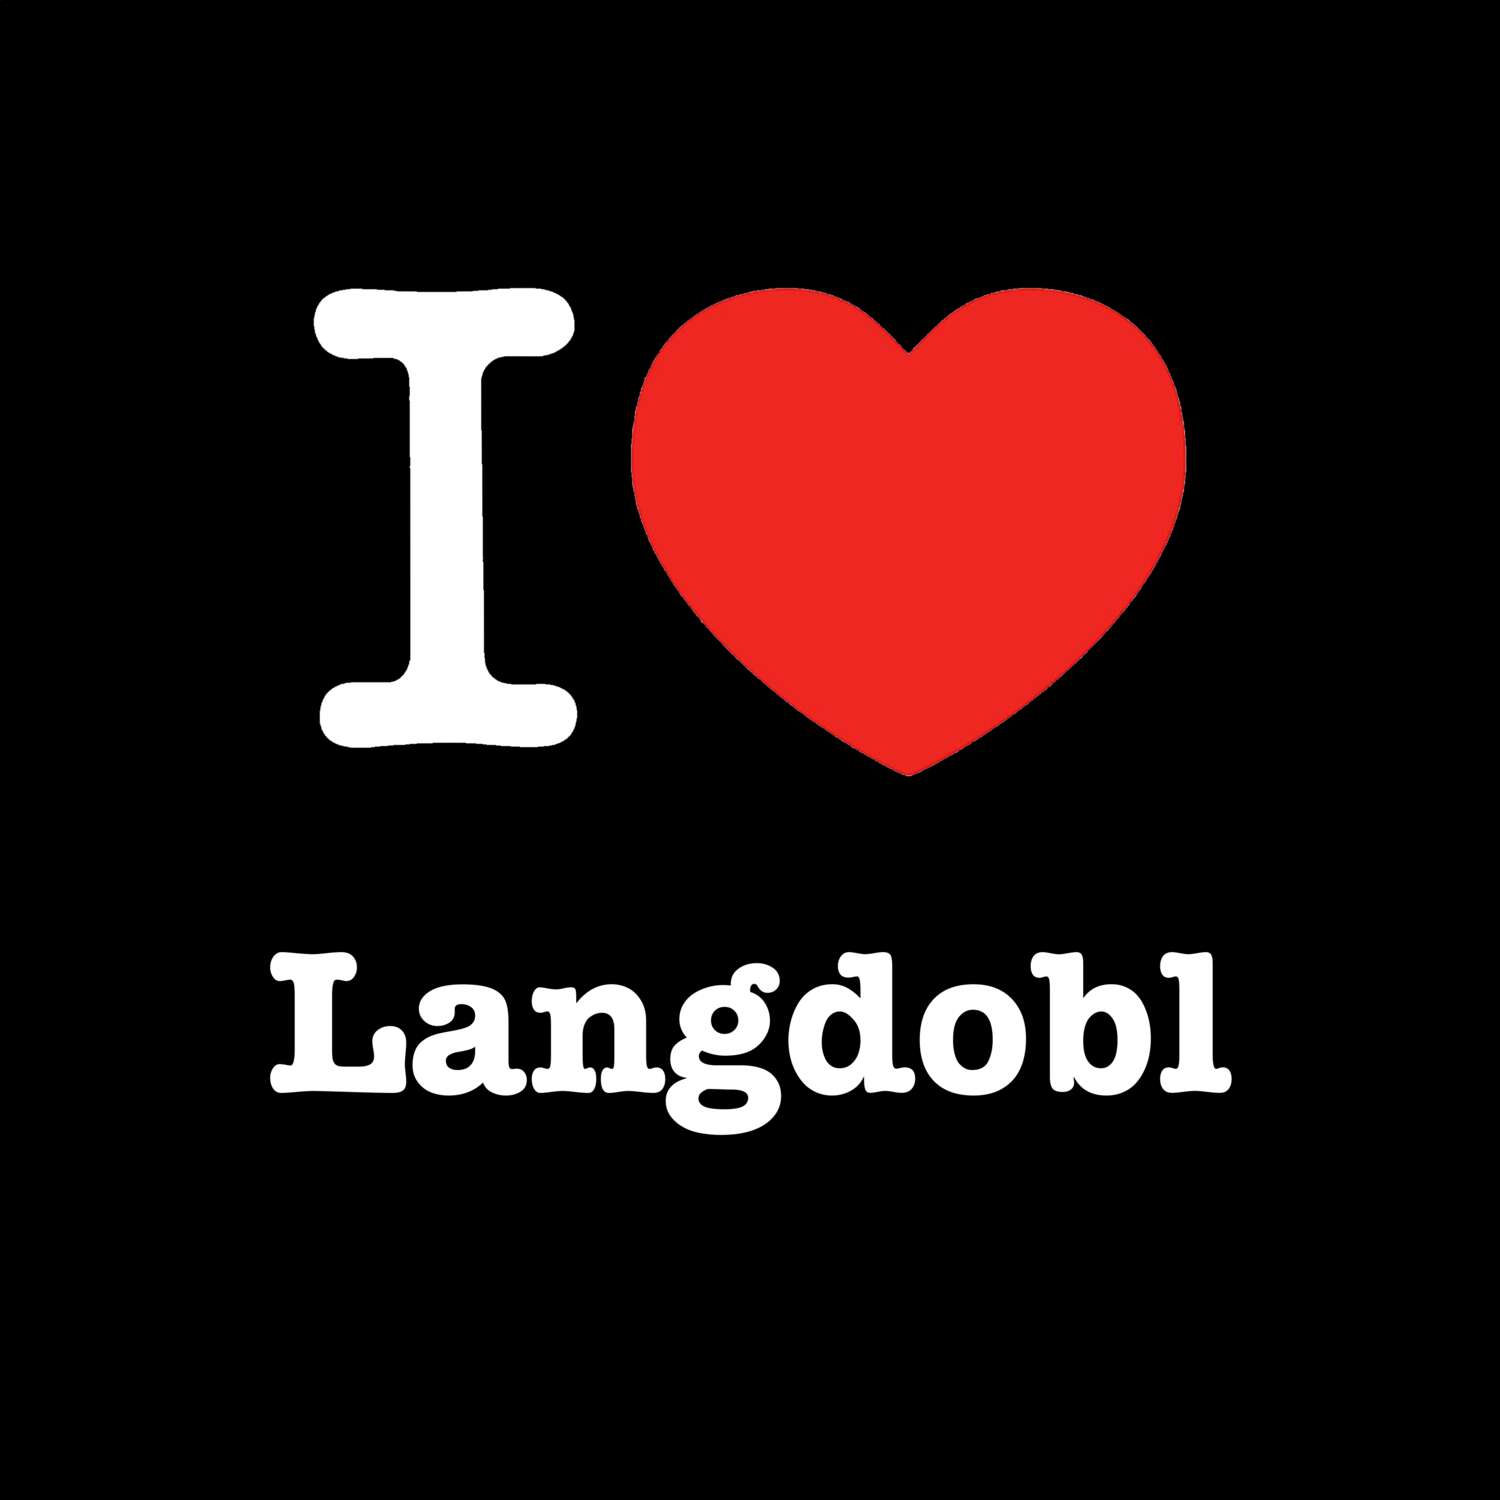 Langdobl T-Shirt »I love«